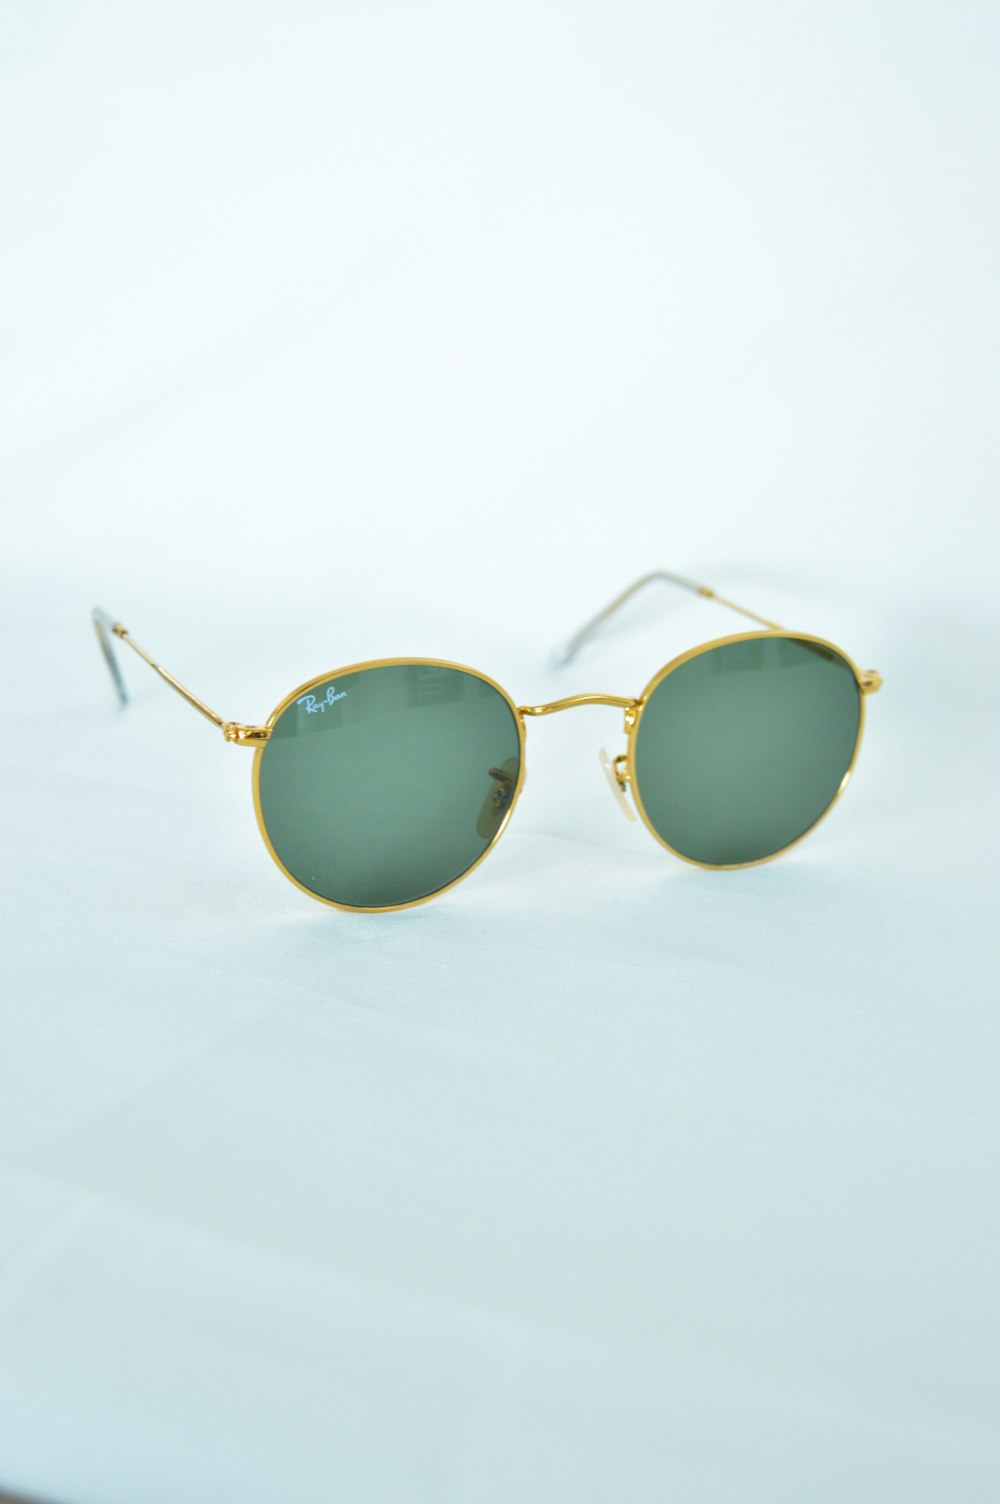 silver framed aviator style sunglasses